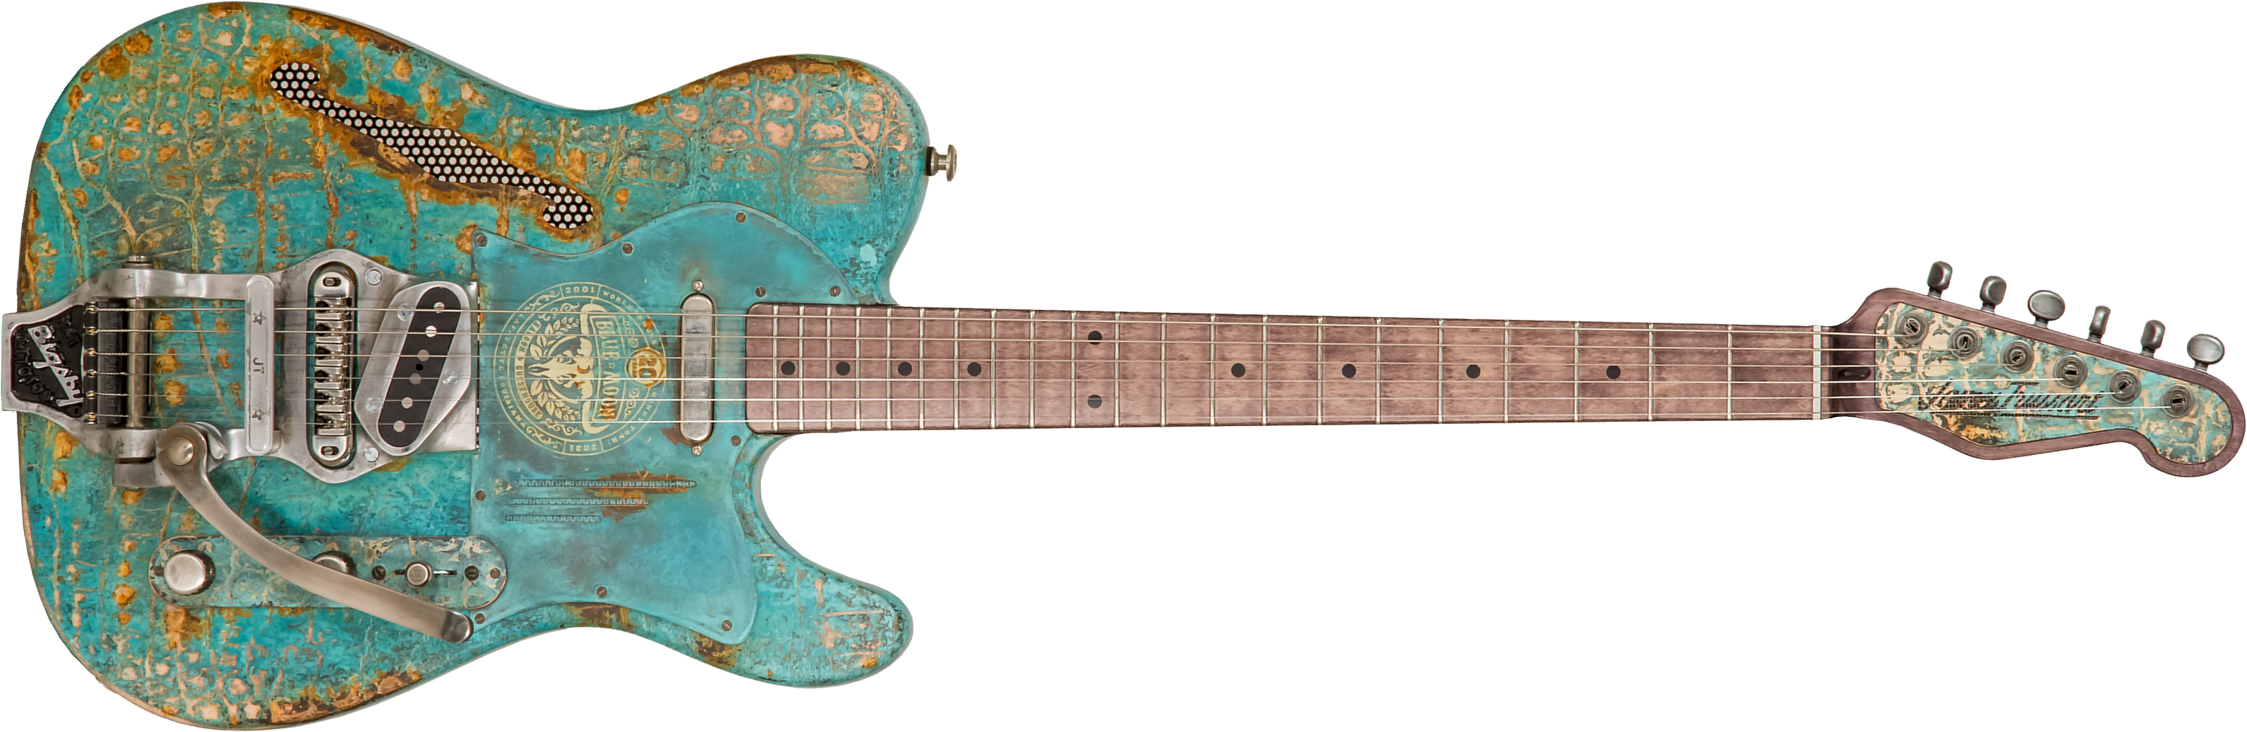 James Trussart Deluxe Steelcaster Blue Moon Perf.back Bigsby 2s Trem Mn #22099 - Titanic Green Gator - Semi hollow elektriche gitaar - Main picture